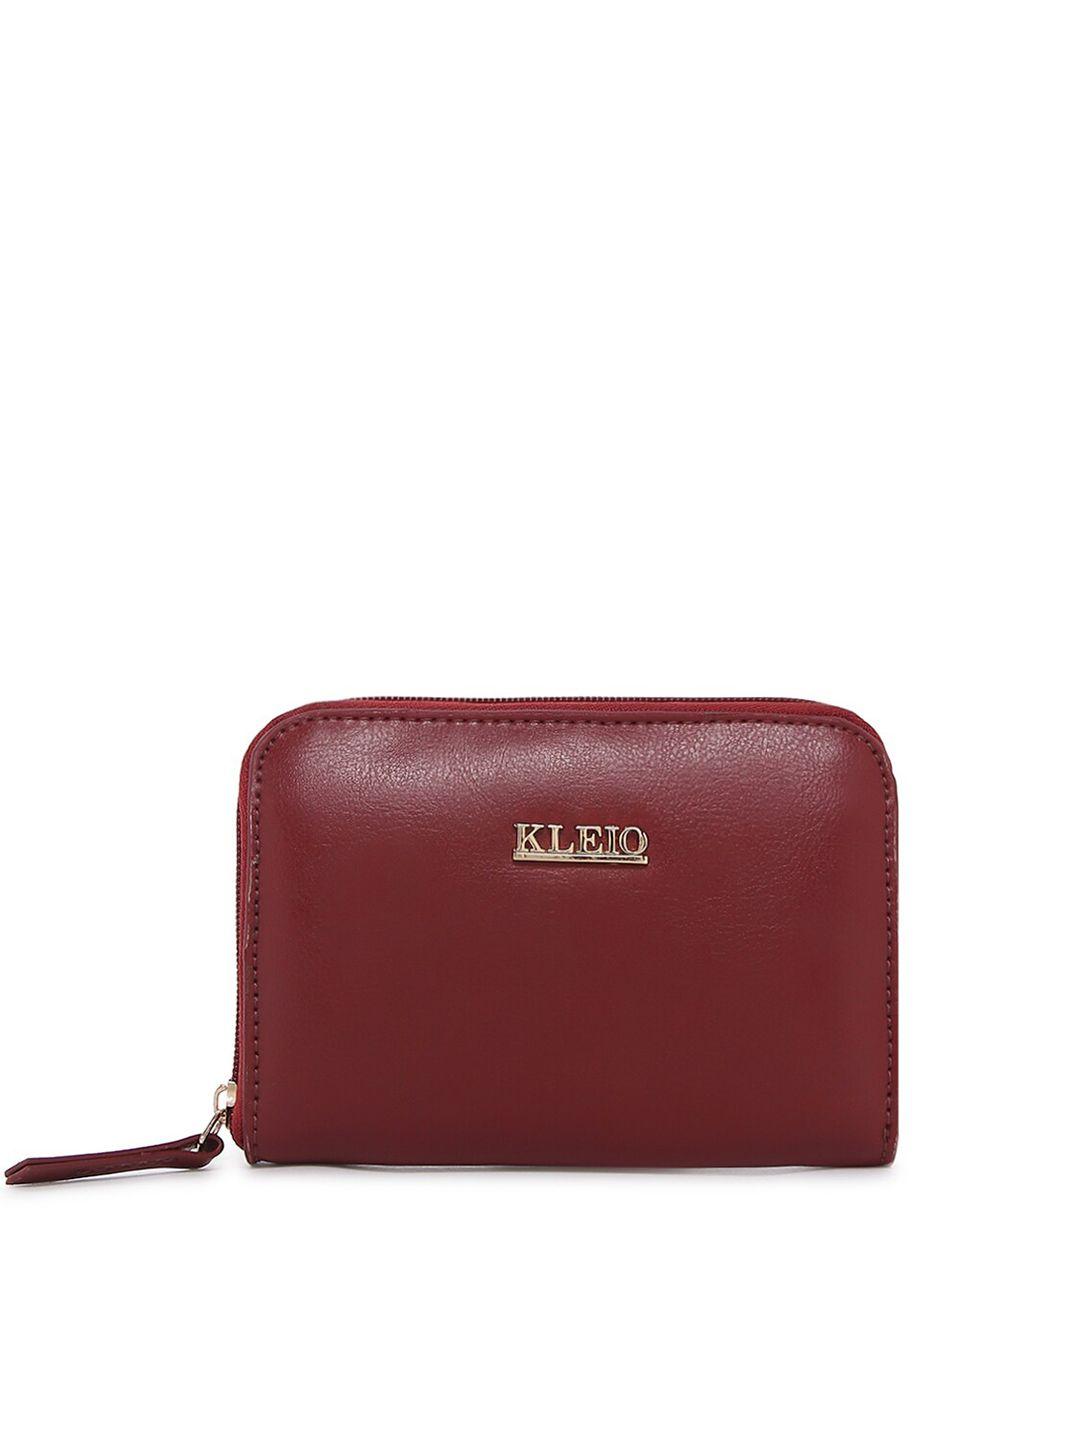 kleio women maroon solid synthetic leather zip around wallet